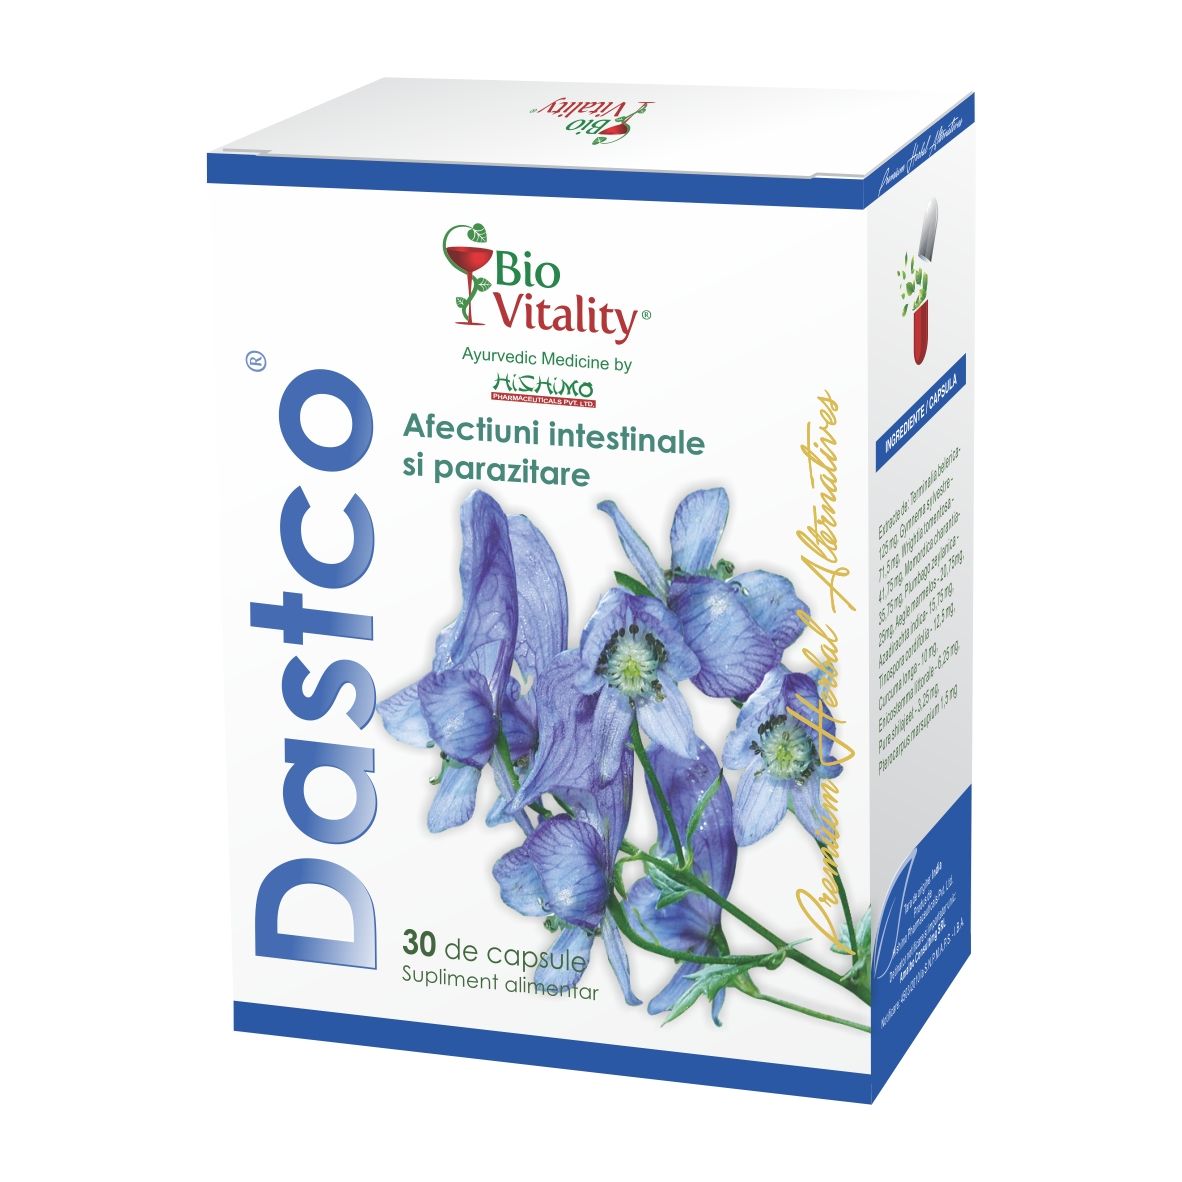 Afectiuni digestive si intestinale - Dastco 30 capsule, farmacieieftina.ro